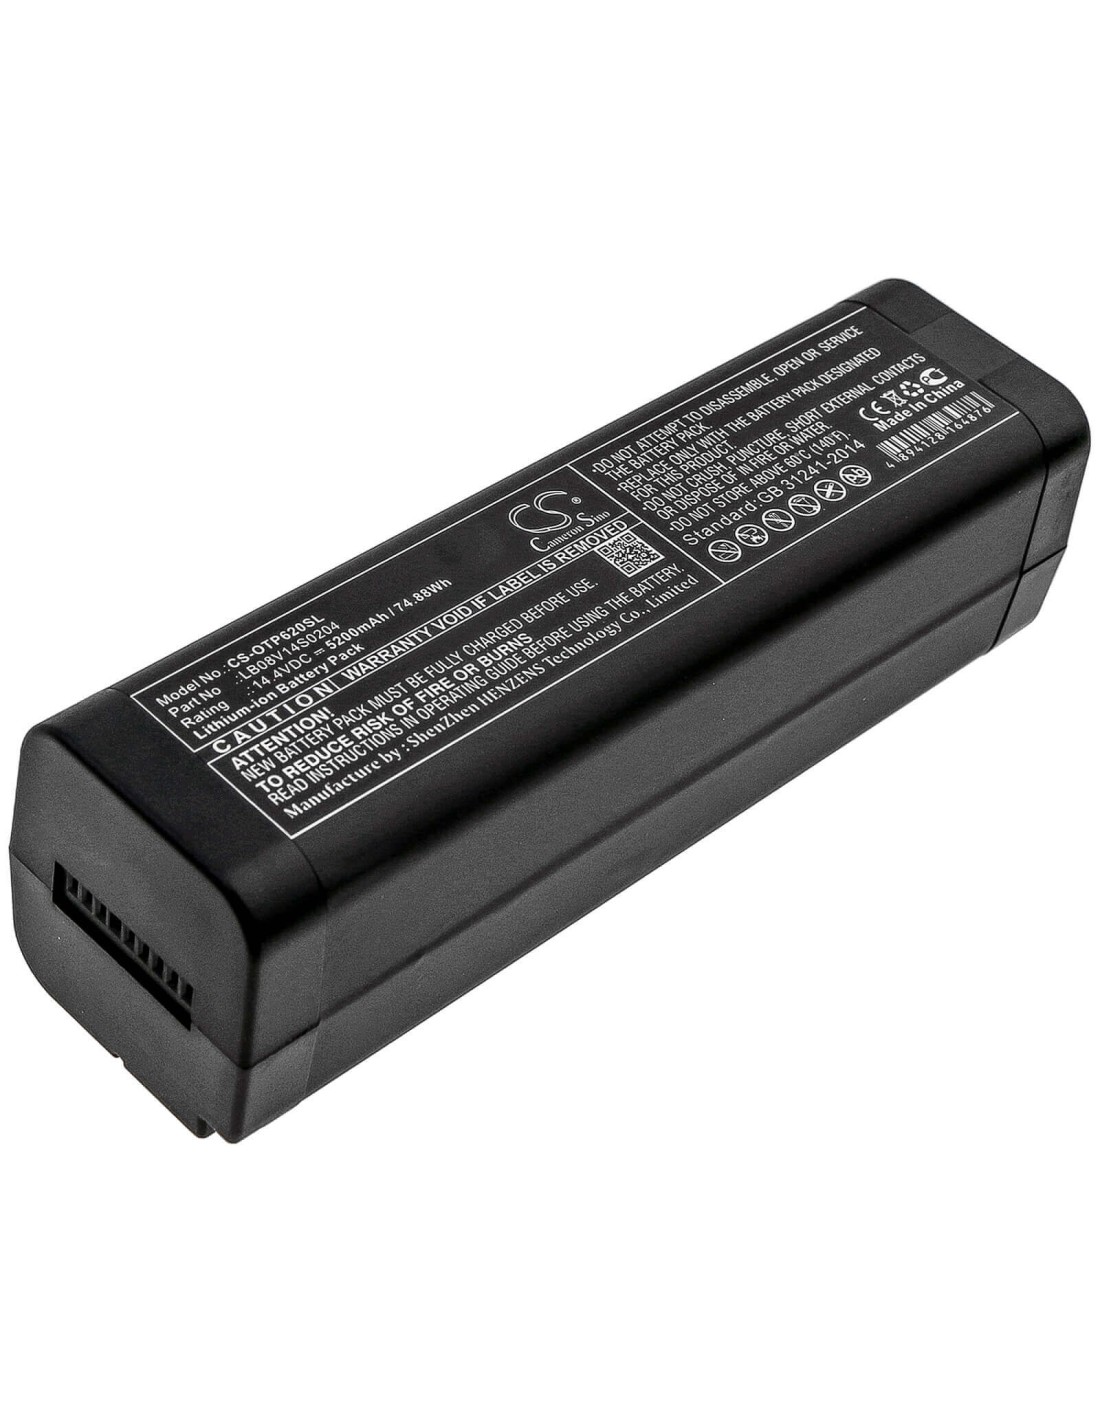 Battery for Opwill, Otp6200, Otp-6200 14.4V, 5200mAh - 74.88Wh